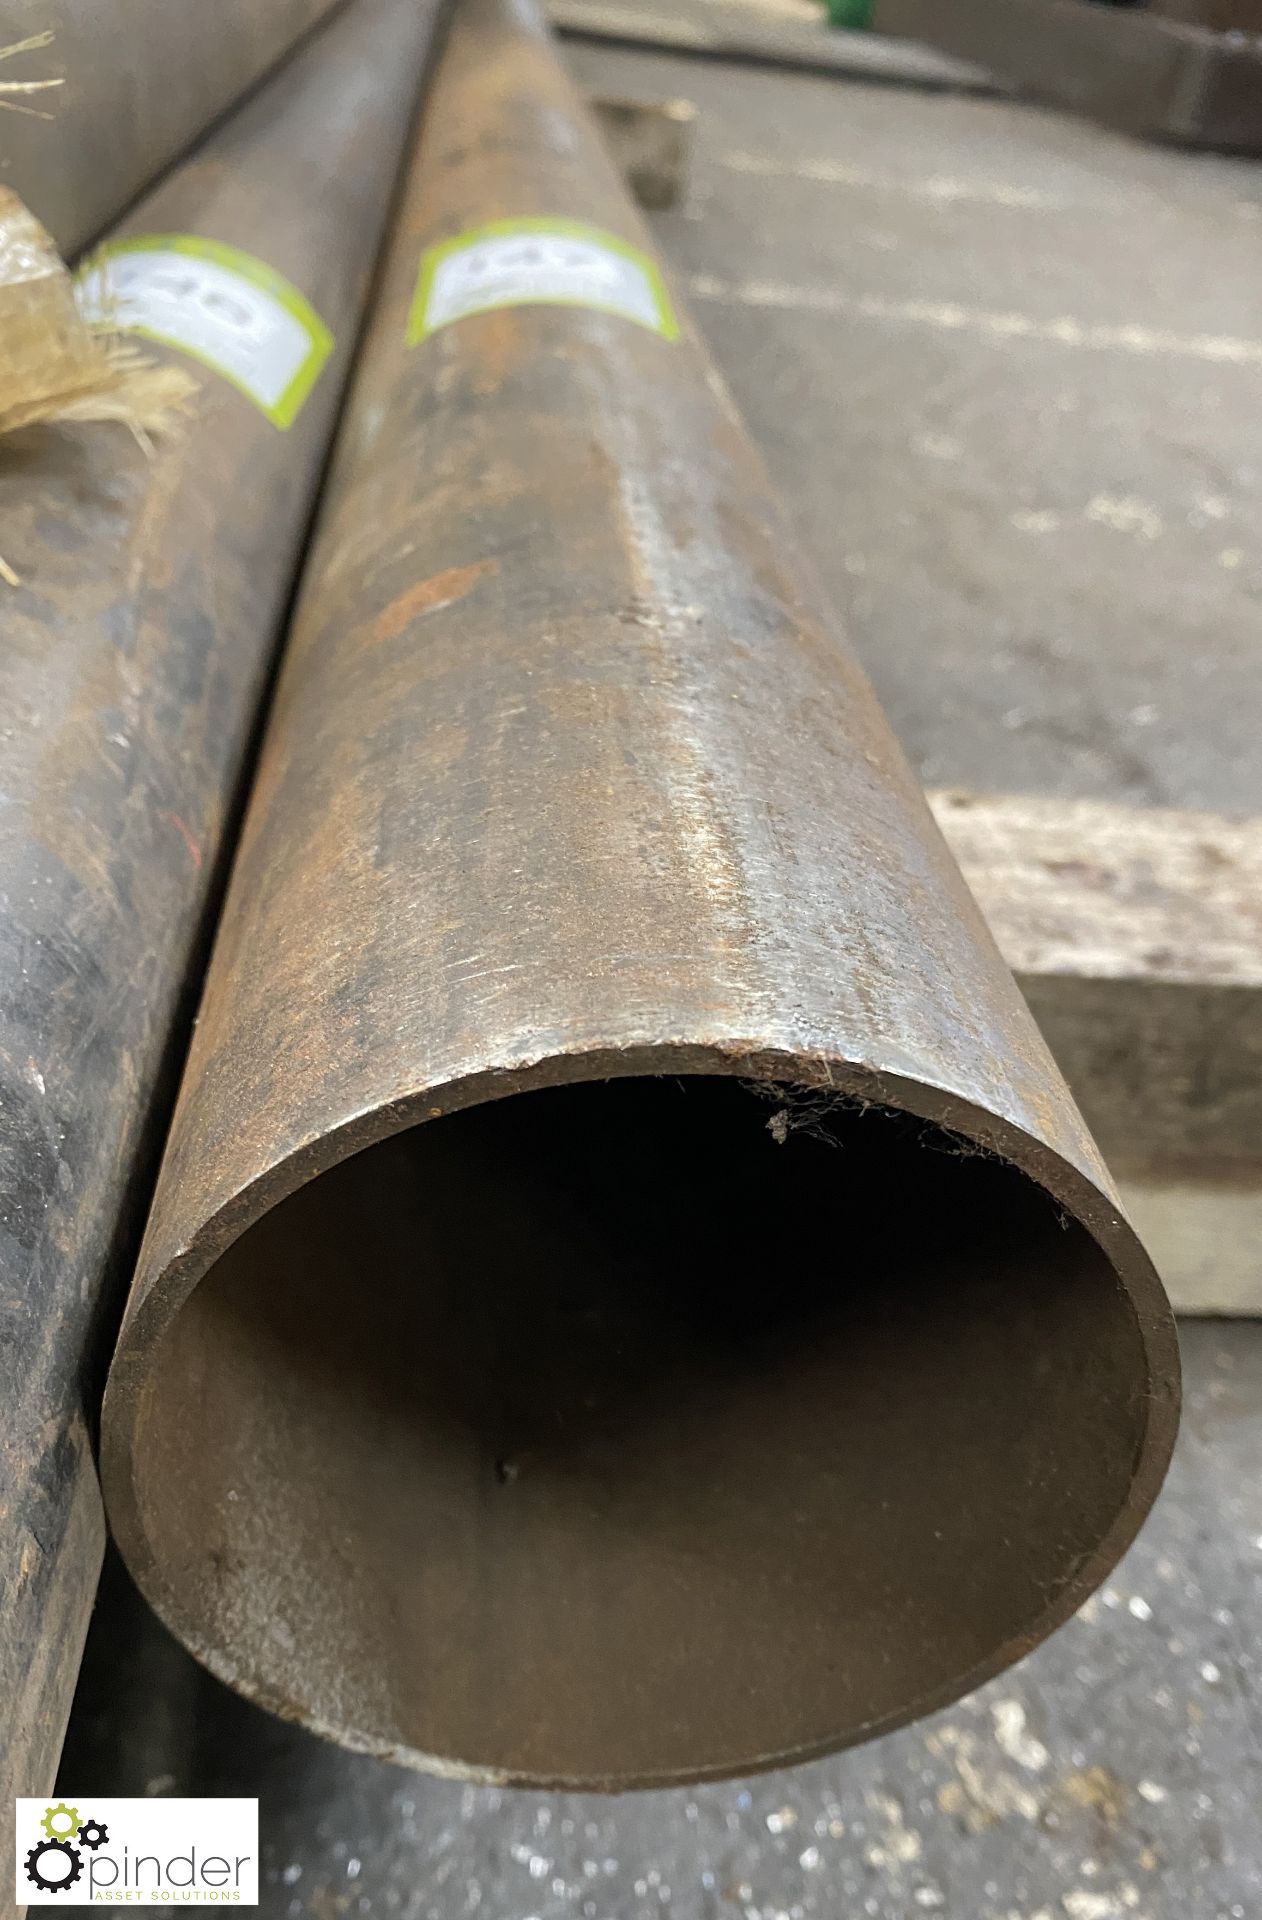 Pipe, grade mild steel, OD 100mm, ID 93mm, length 2.6m - Image 2 of 3